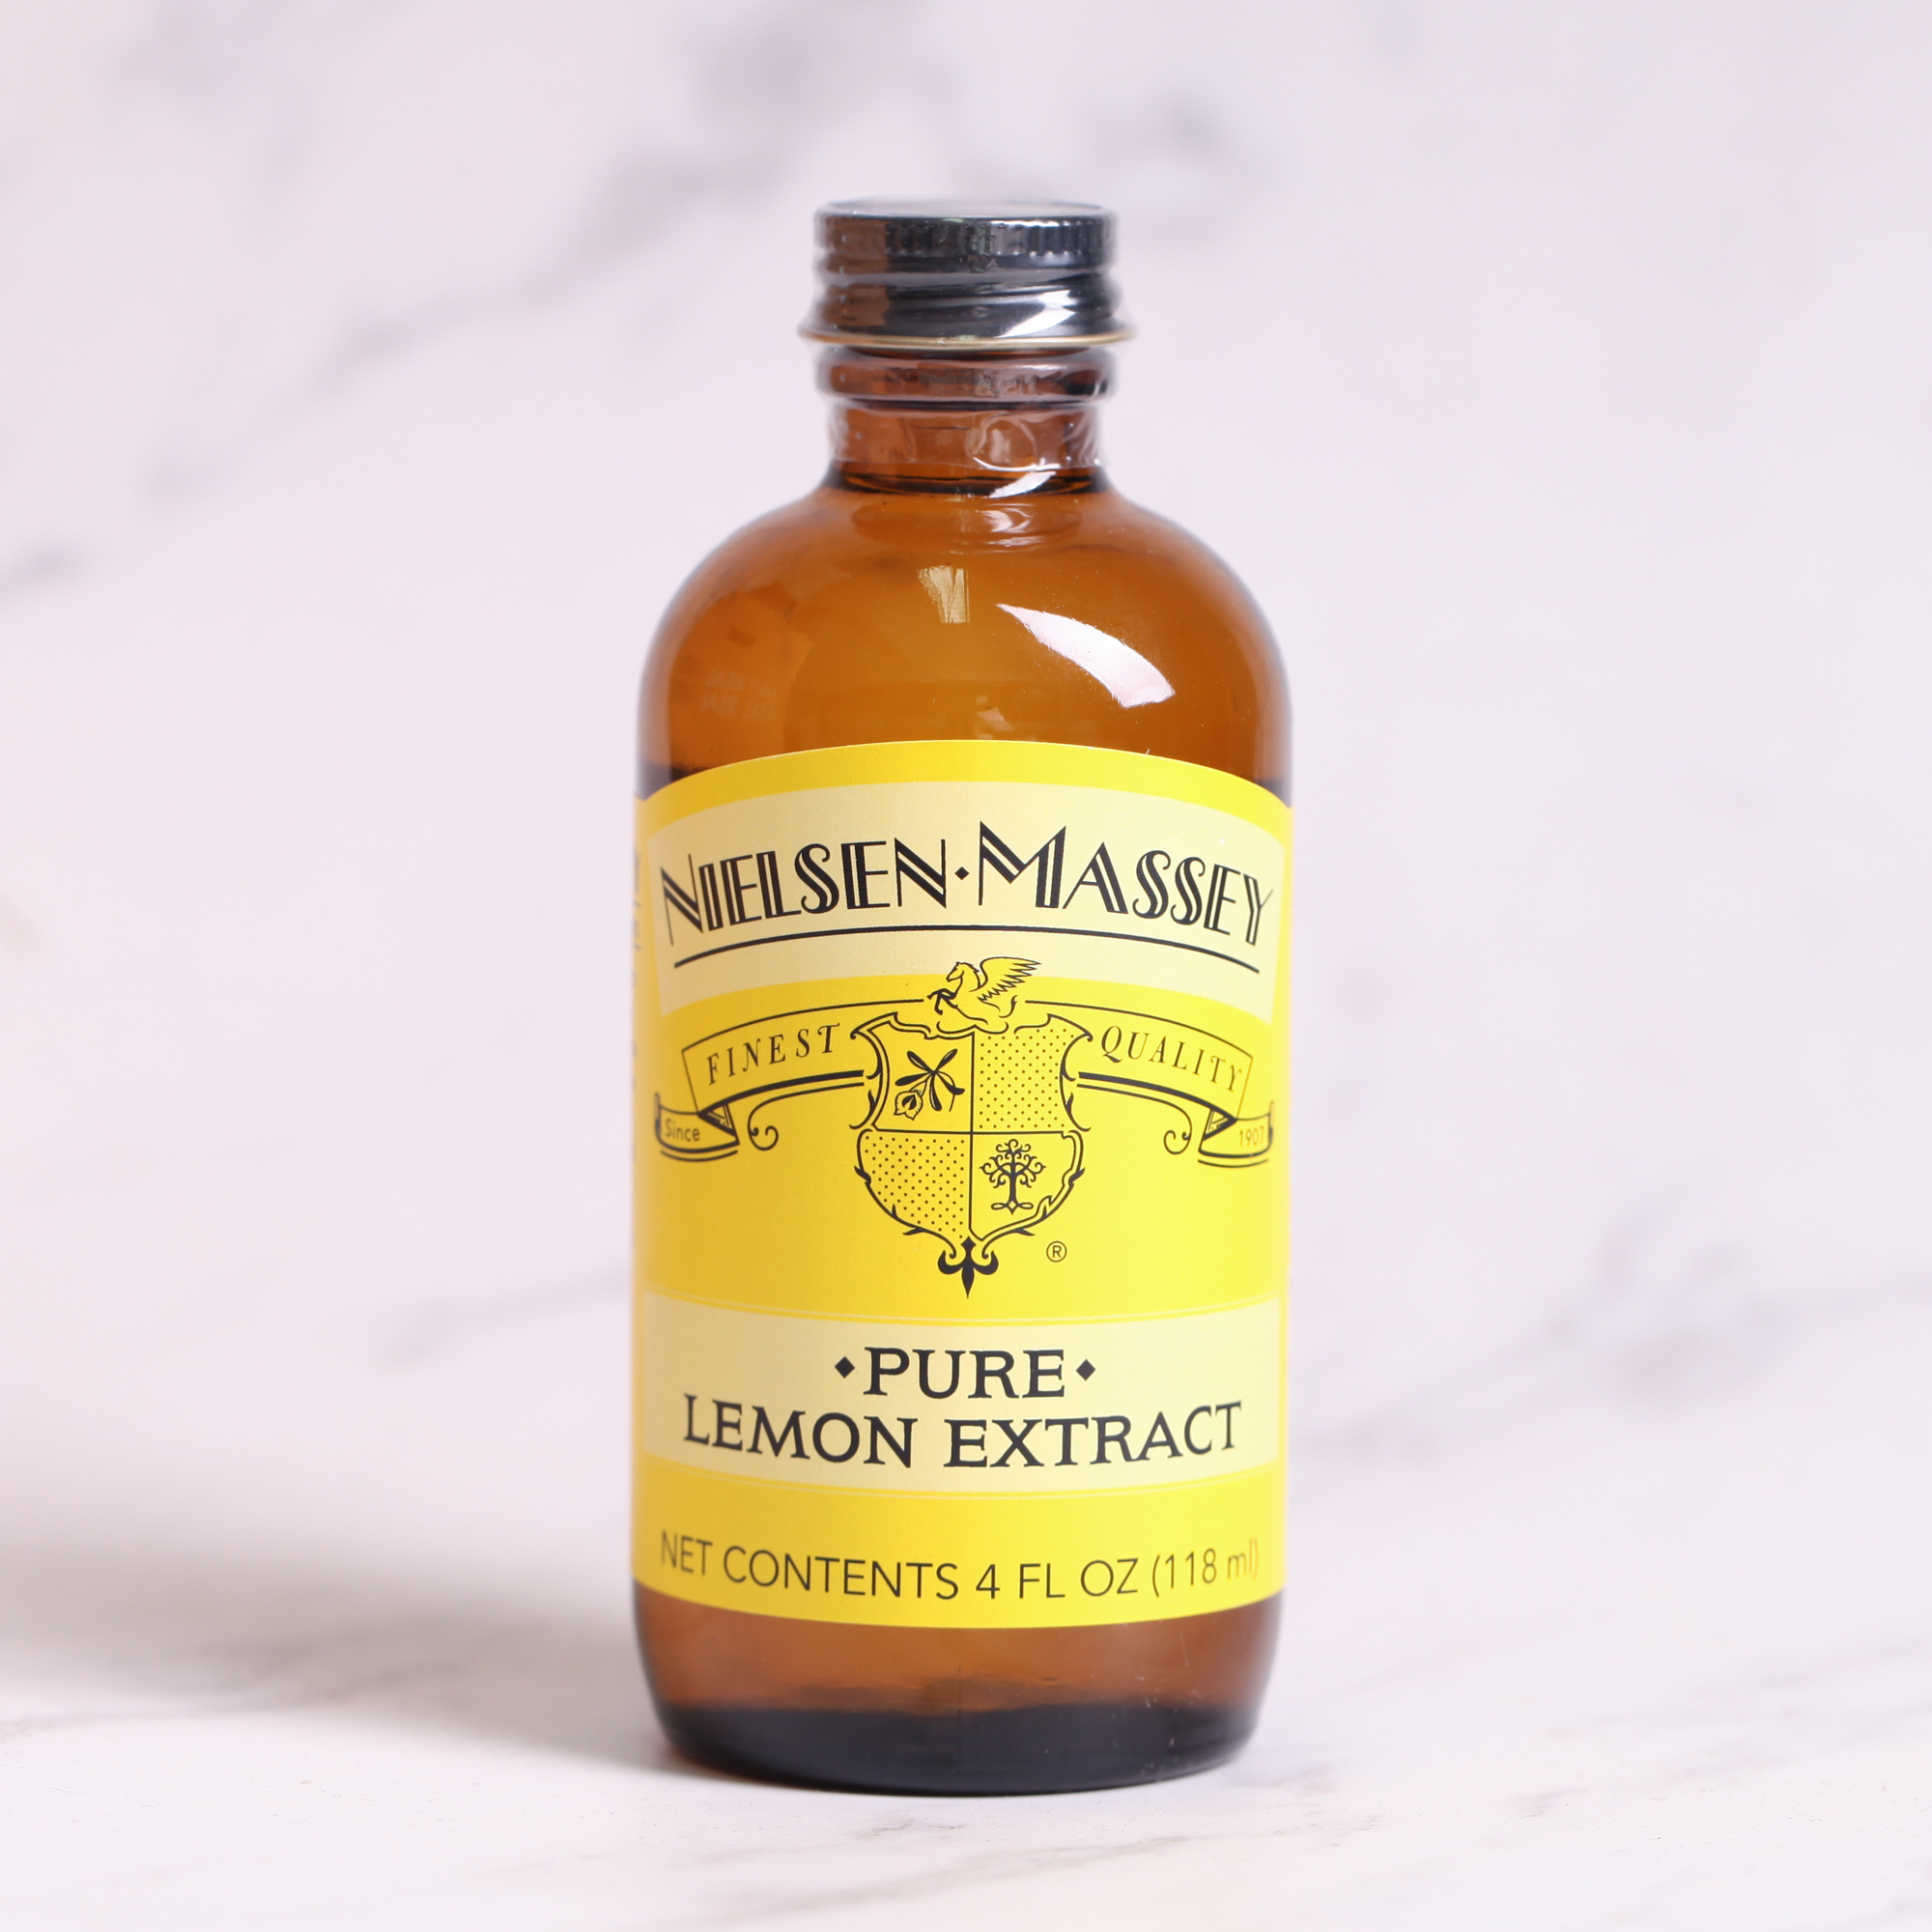 Nielsen; Pure Lemon Extract